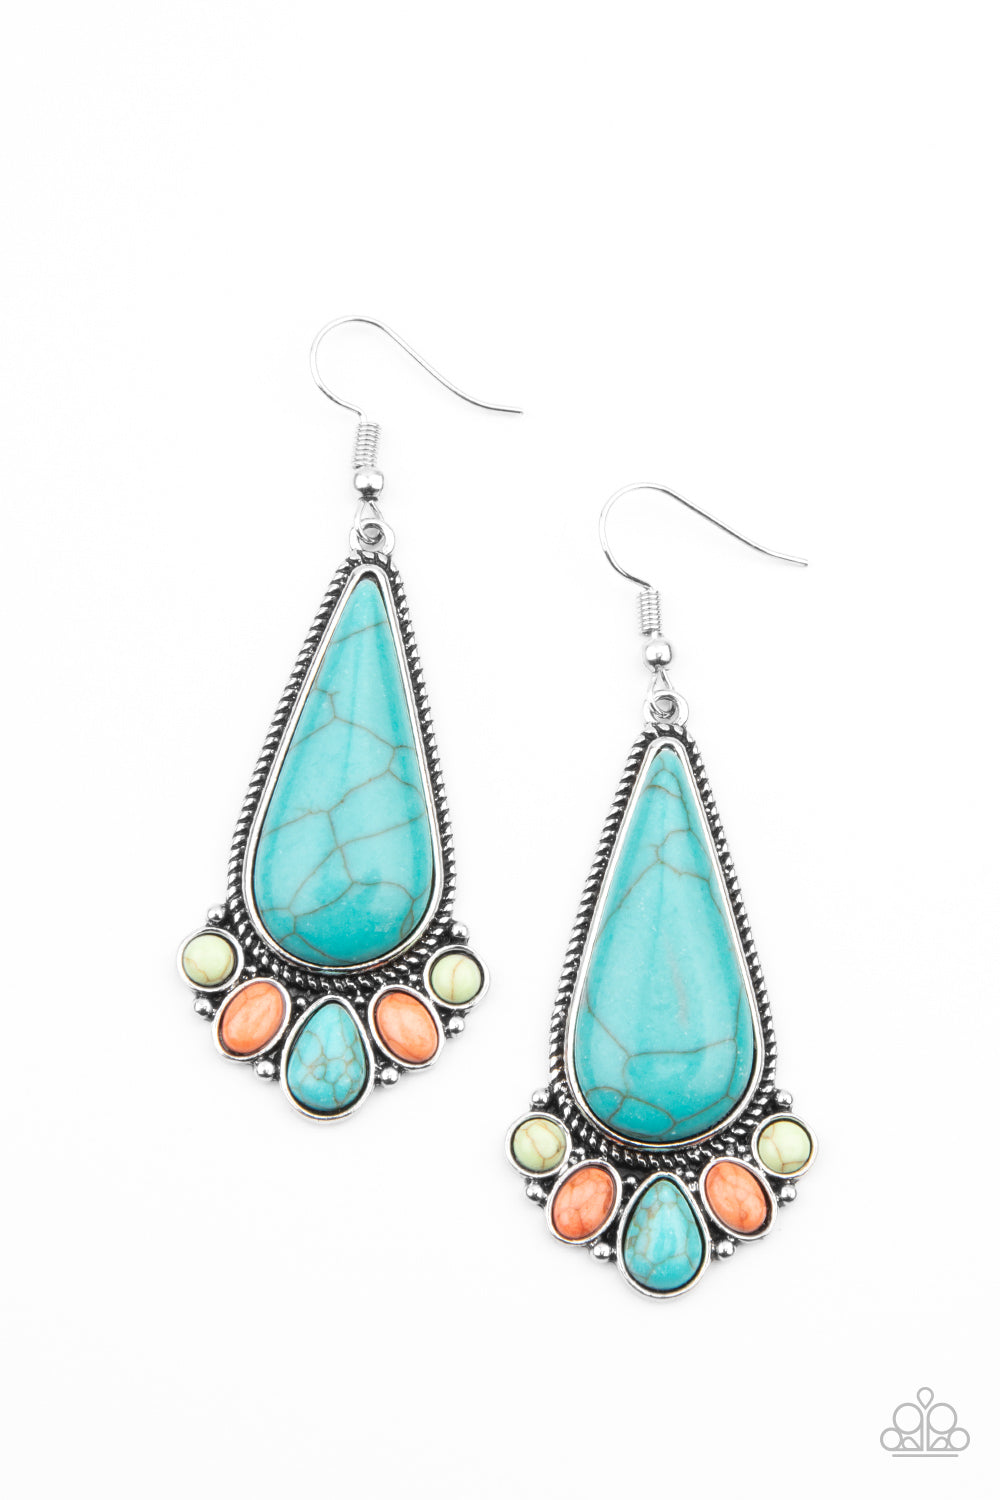 Rural Recluse - Multi Blue, Green & Orange Stone Earrings - Princess Glam Shop